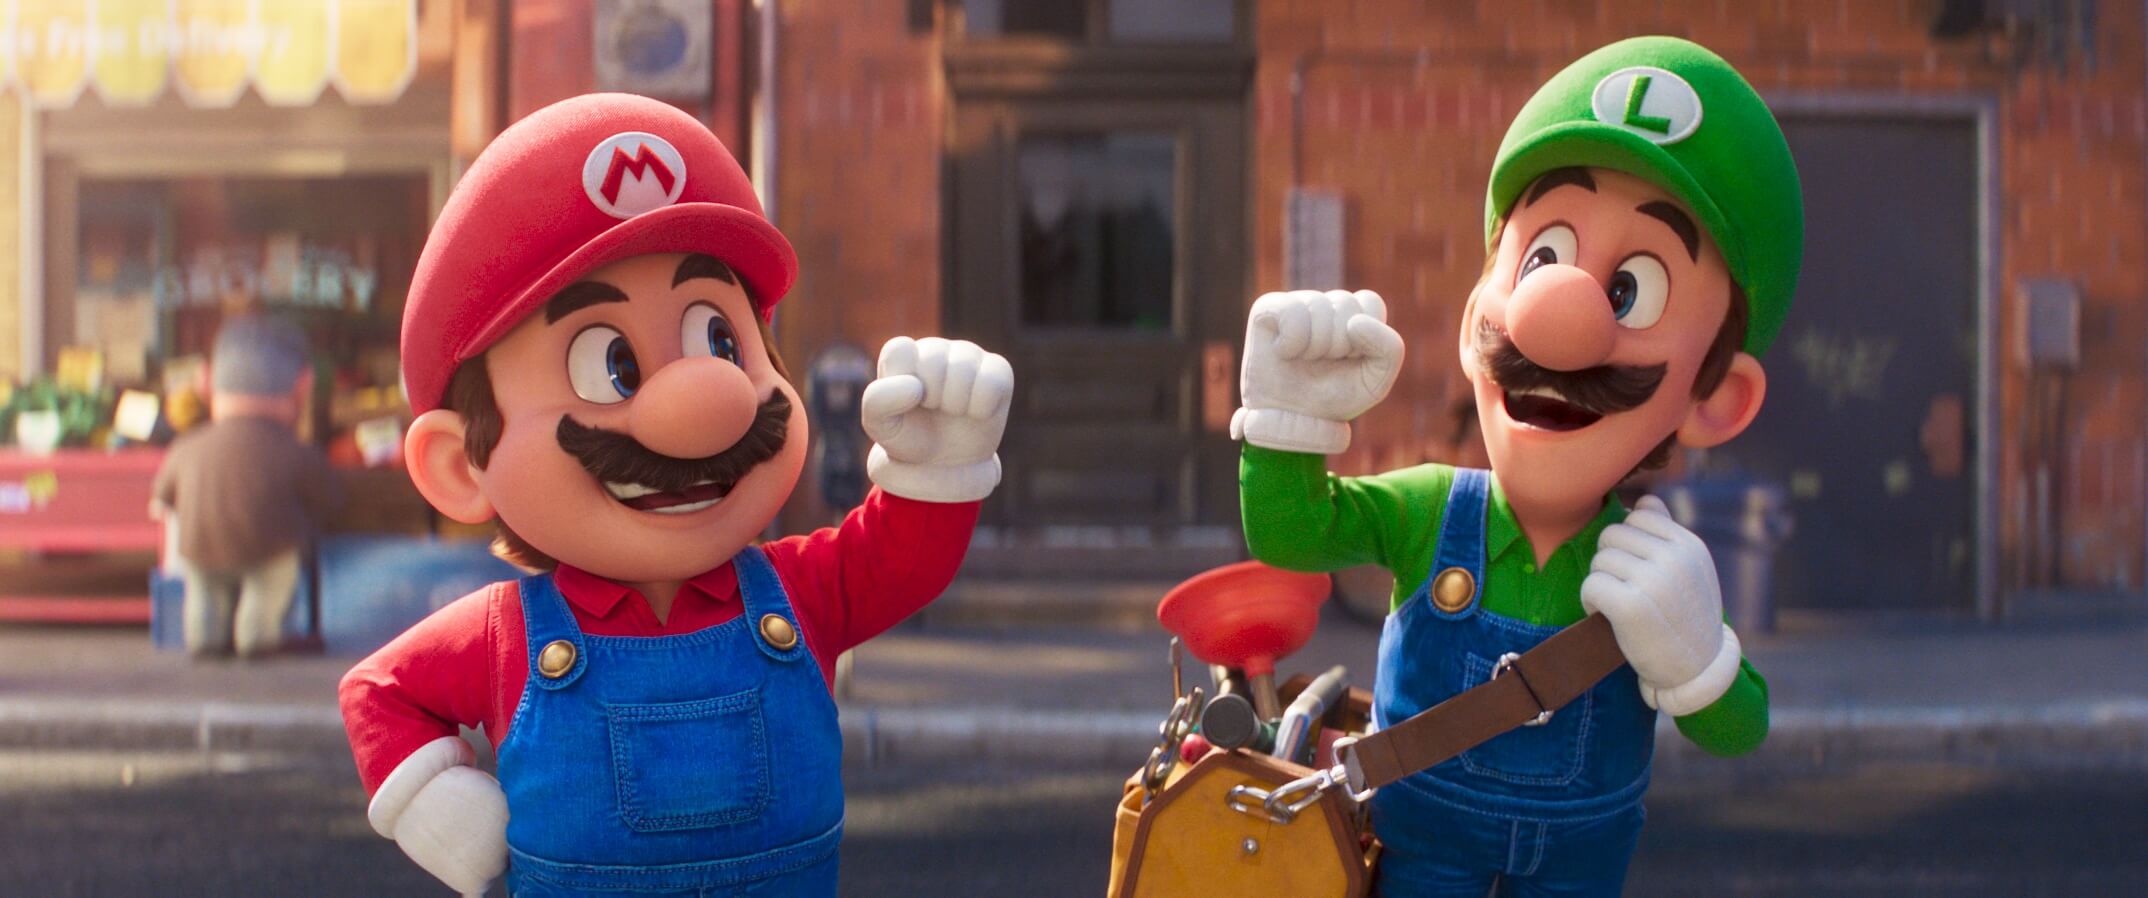 'Super Mario Bros.' Maro and Luigi pump fists